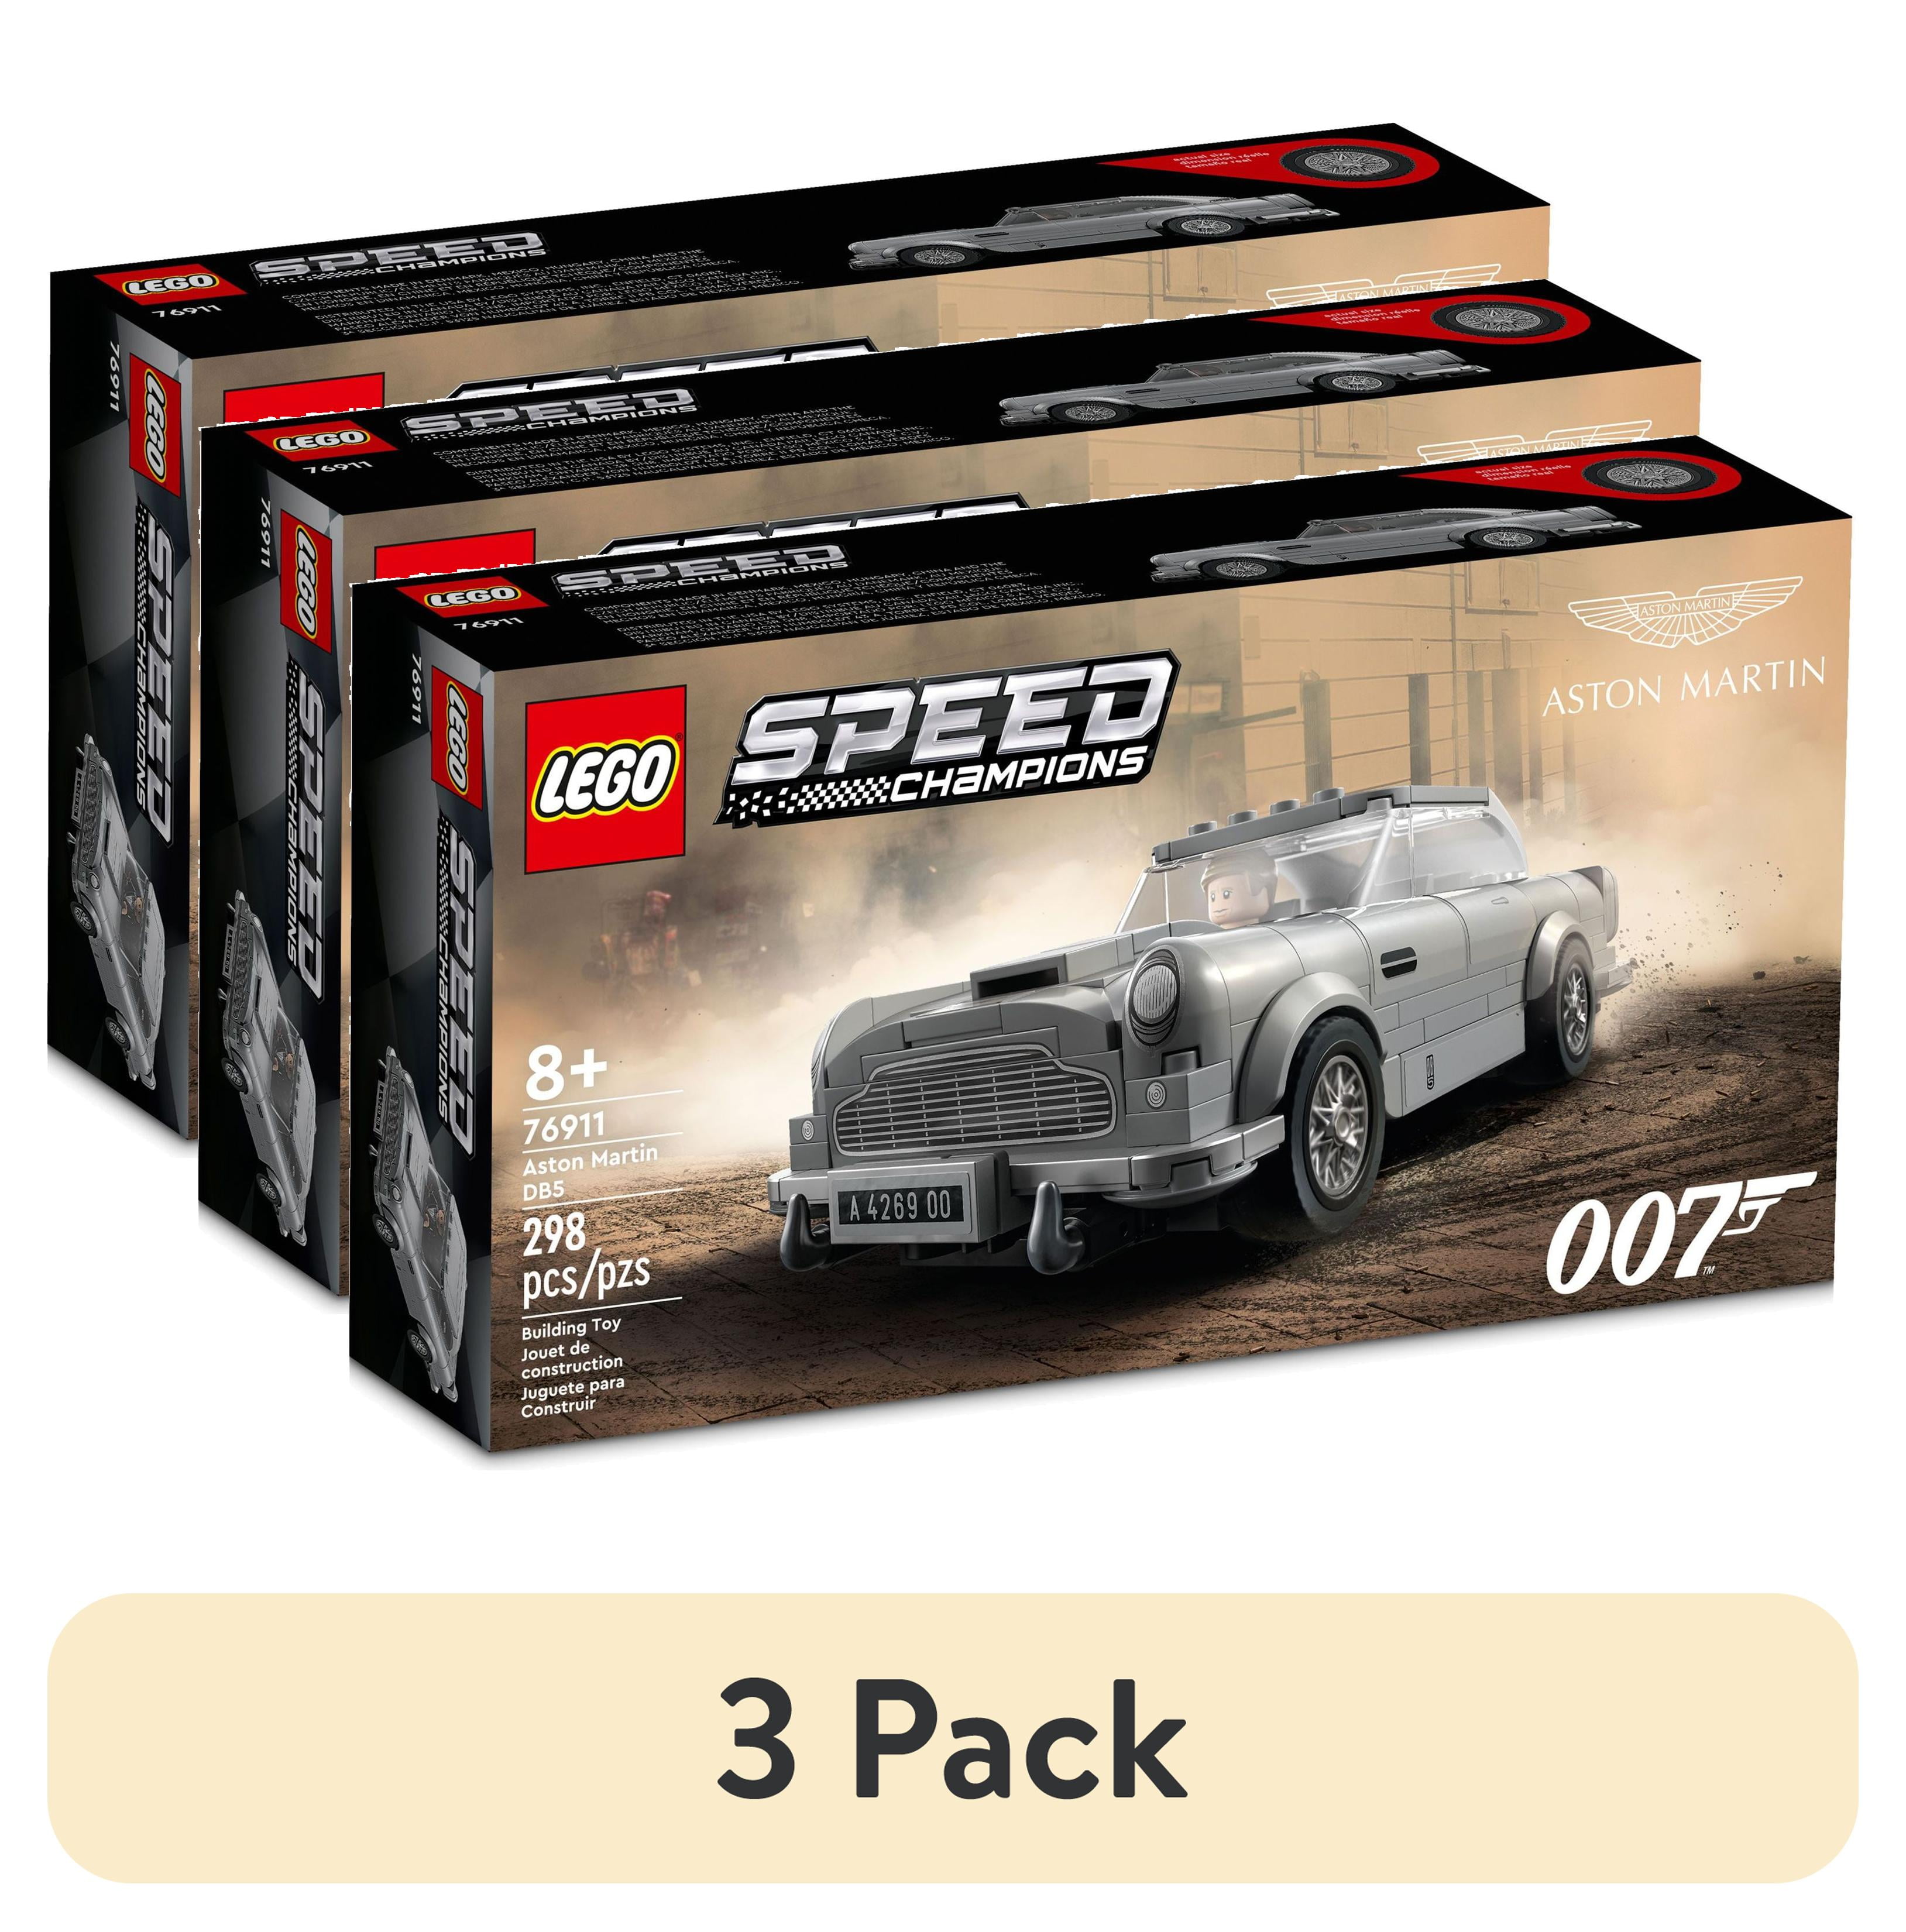 2 pack) LEGO Speed Champions 007 Aston Martin DB5 76911 Building